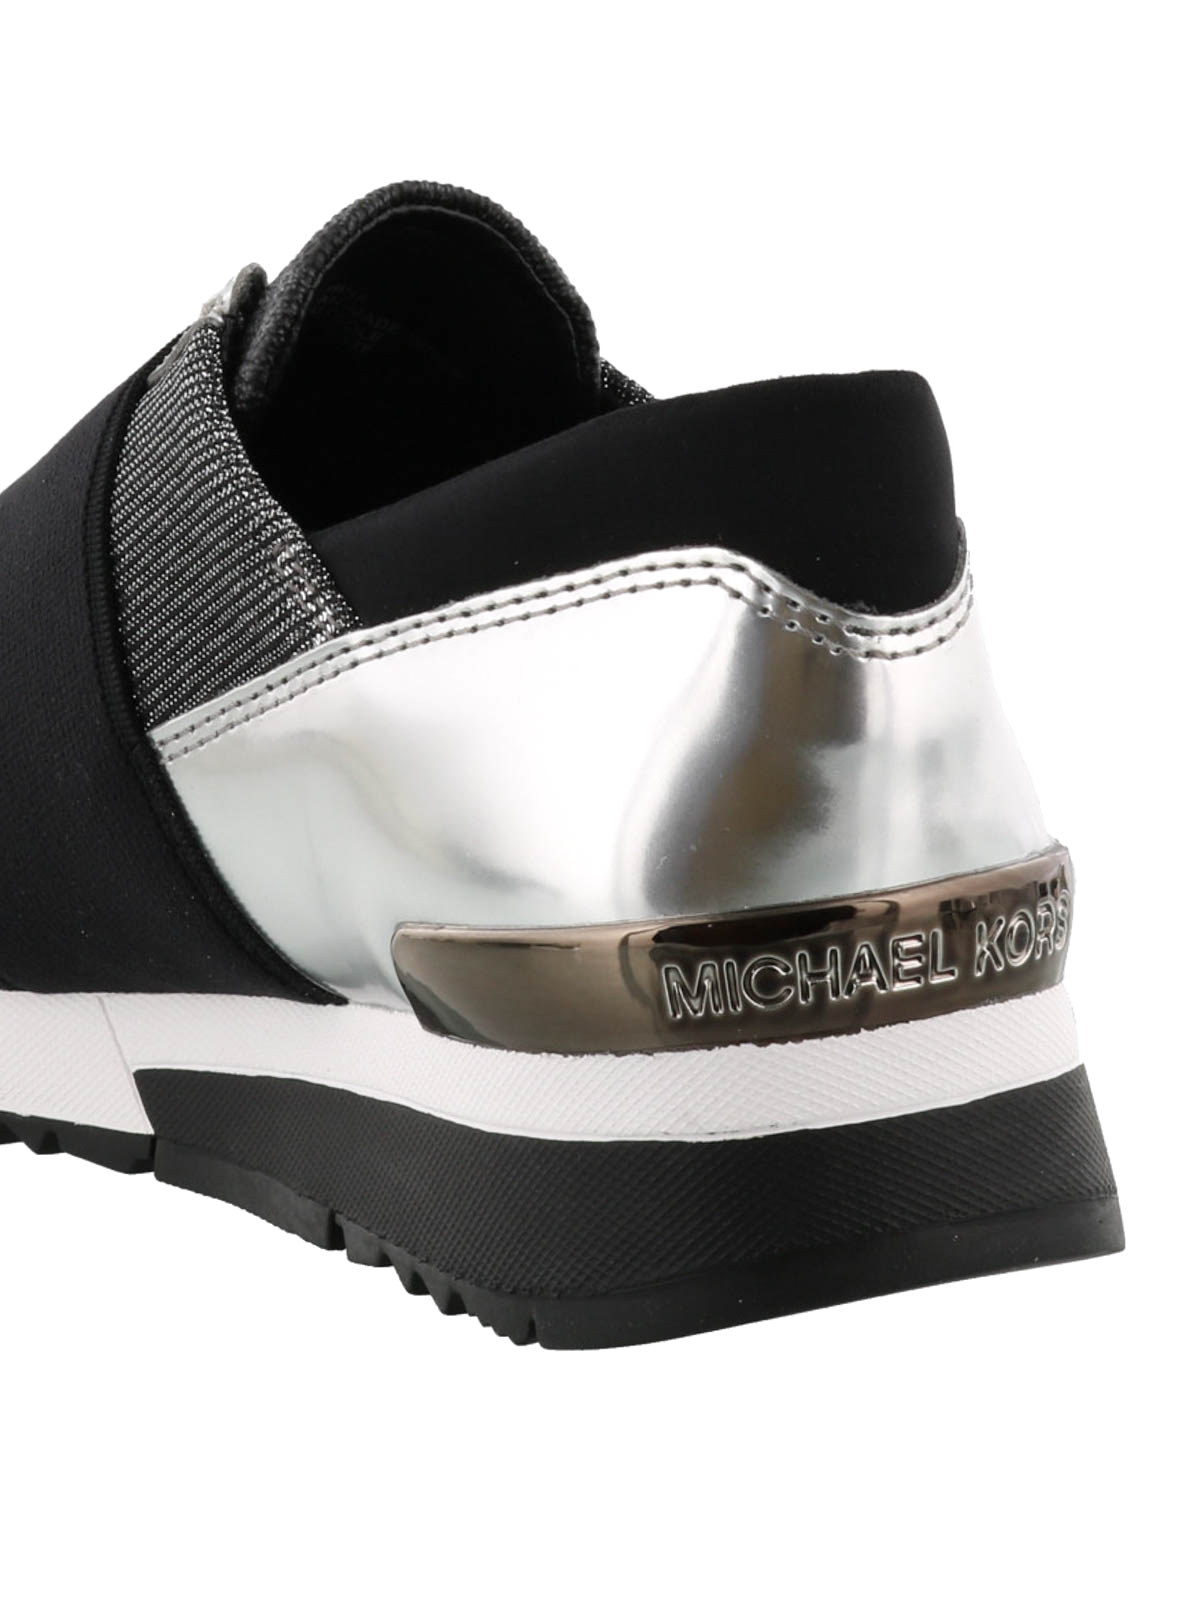 Michael Kors Allie Stride Trainer Black Sneakers Womens sizes 510NEW   eBay